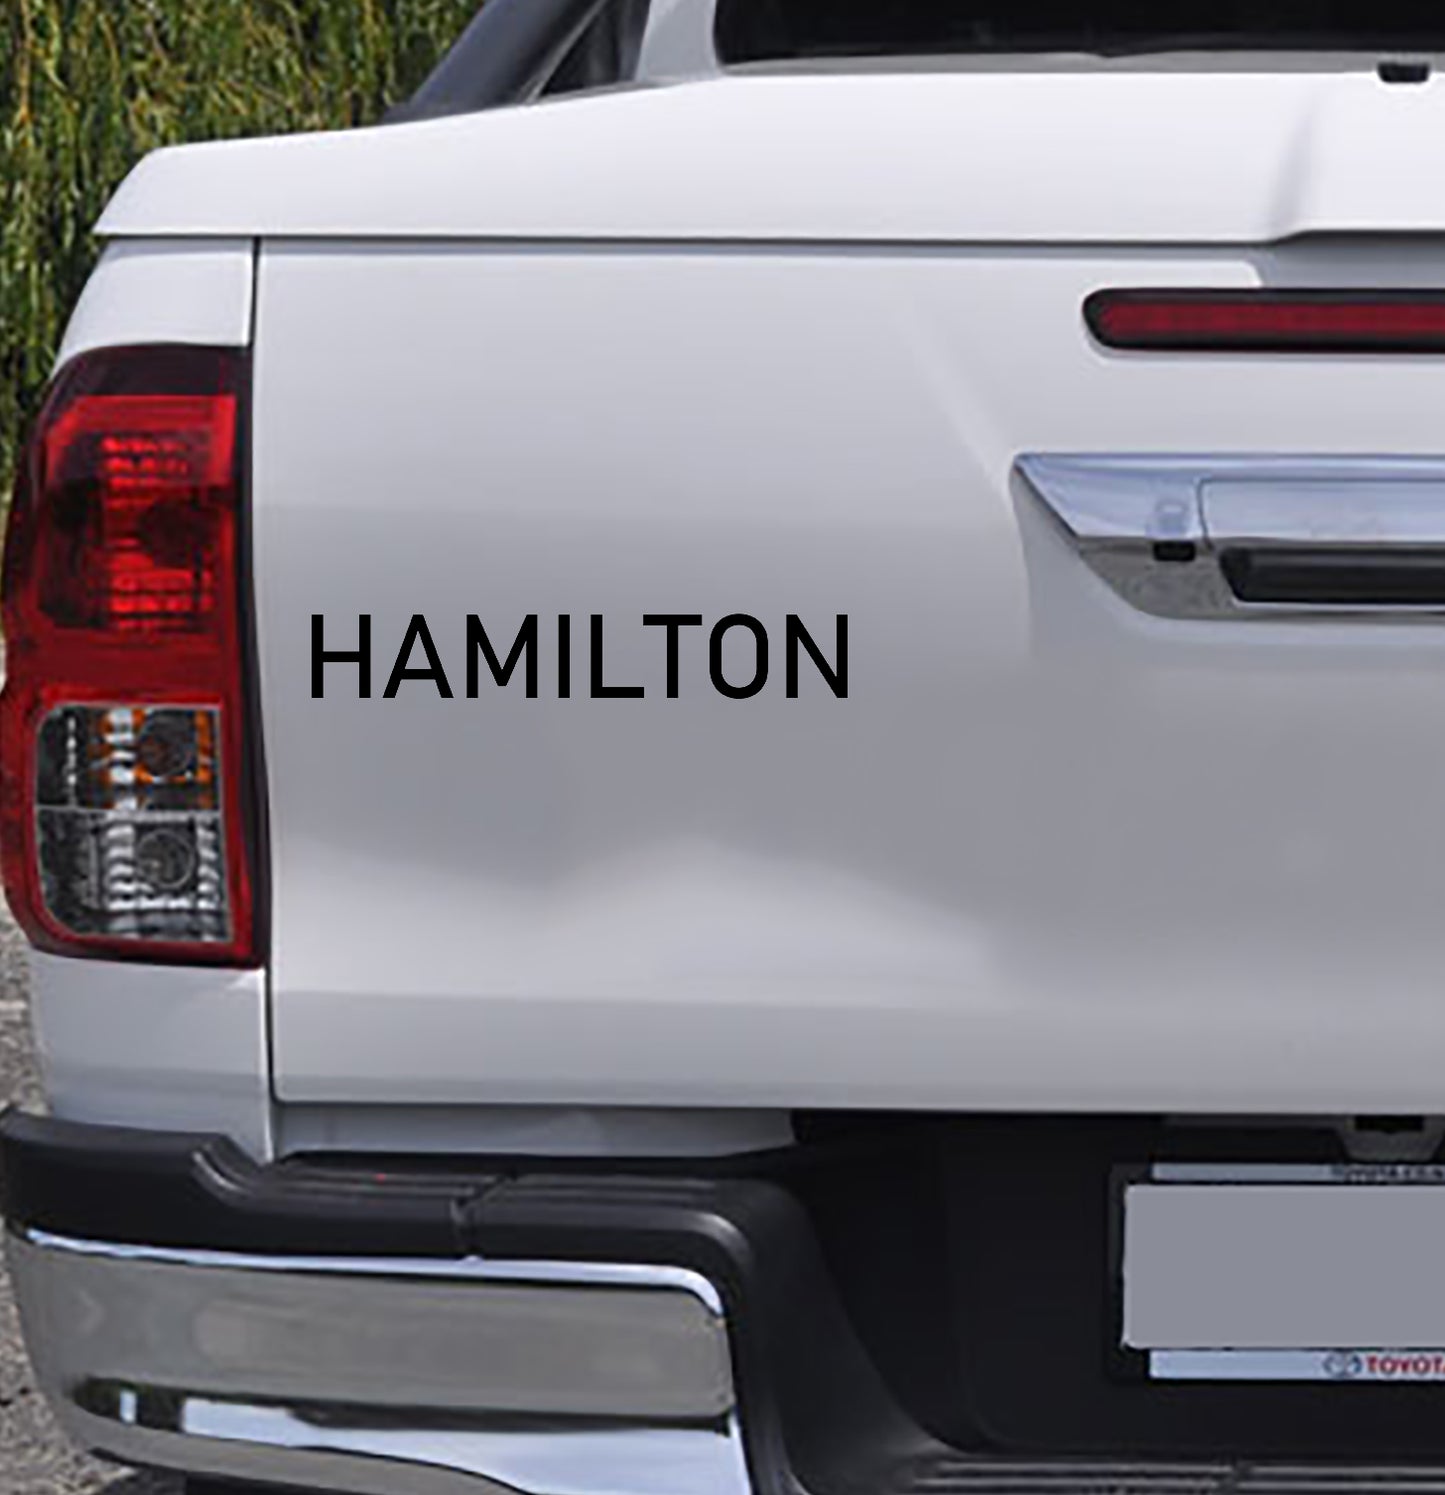 Hamilton Name Vinyl Decal Sticker